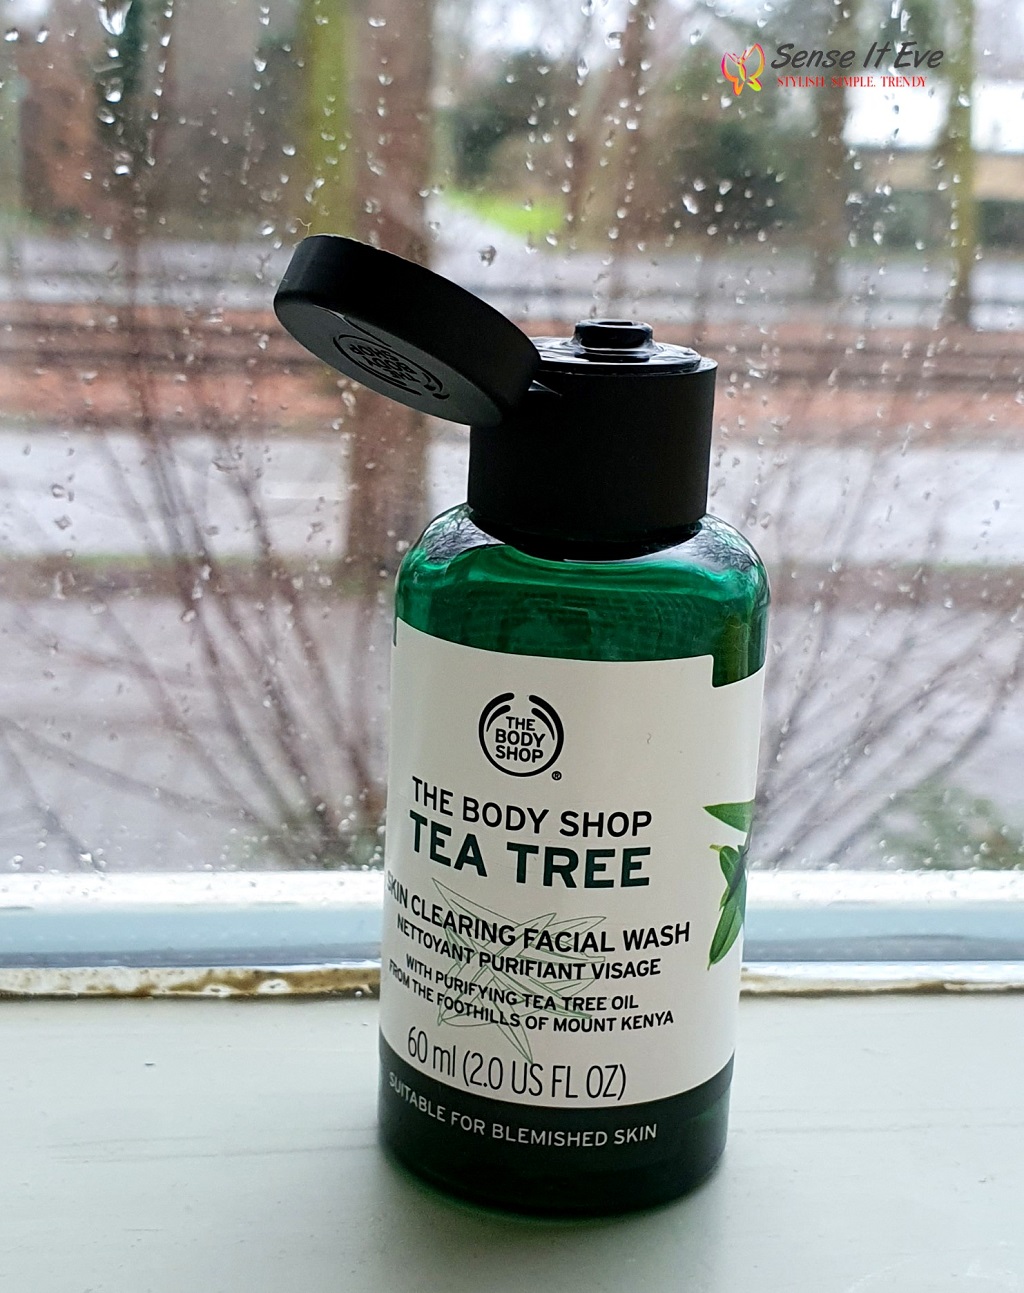 The Body Shop Tea Tree Skin Clearing Facial Wash Packaging Sense It Eve The Body Shop Tea Tree Skin Clearing Facial Wash Review